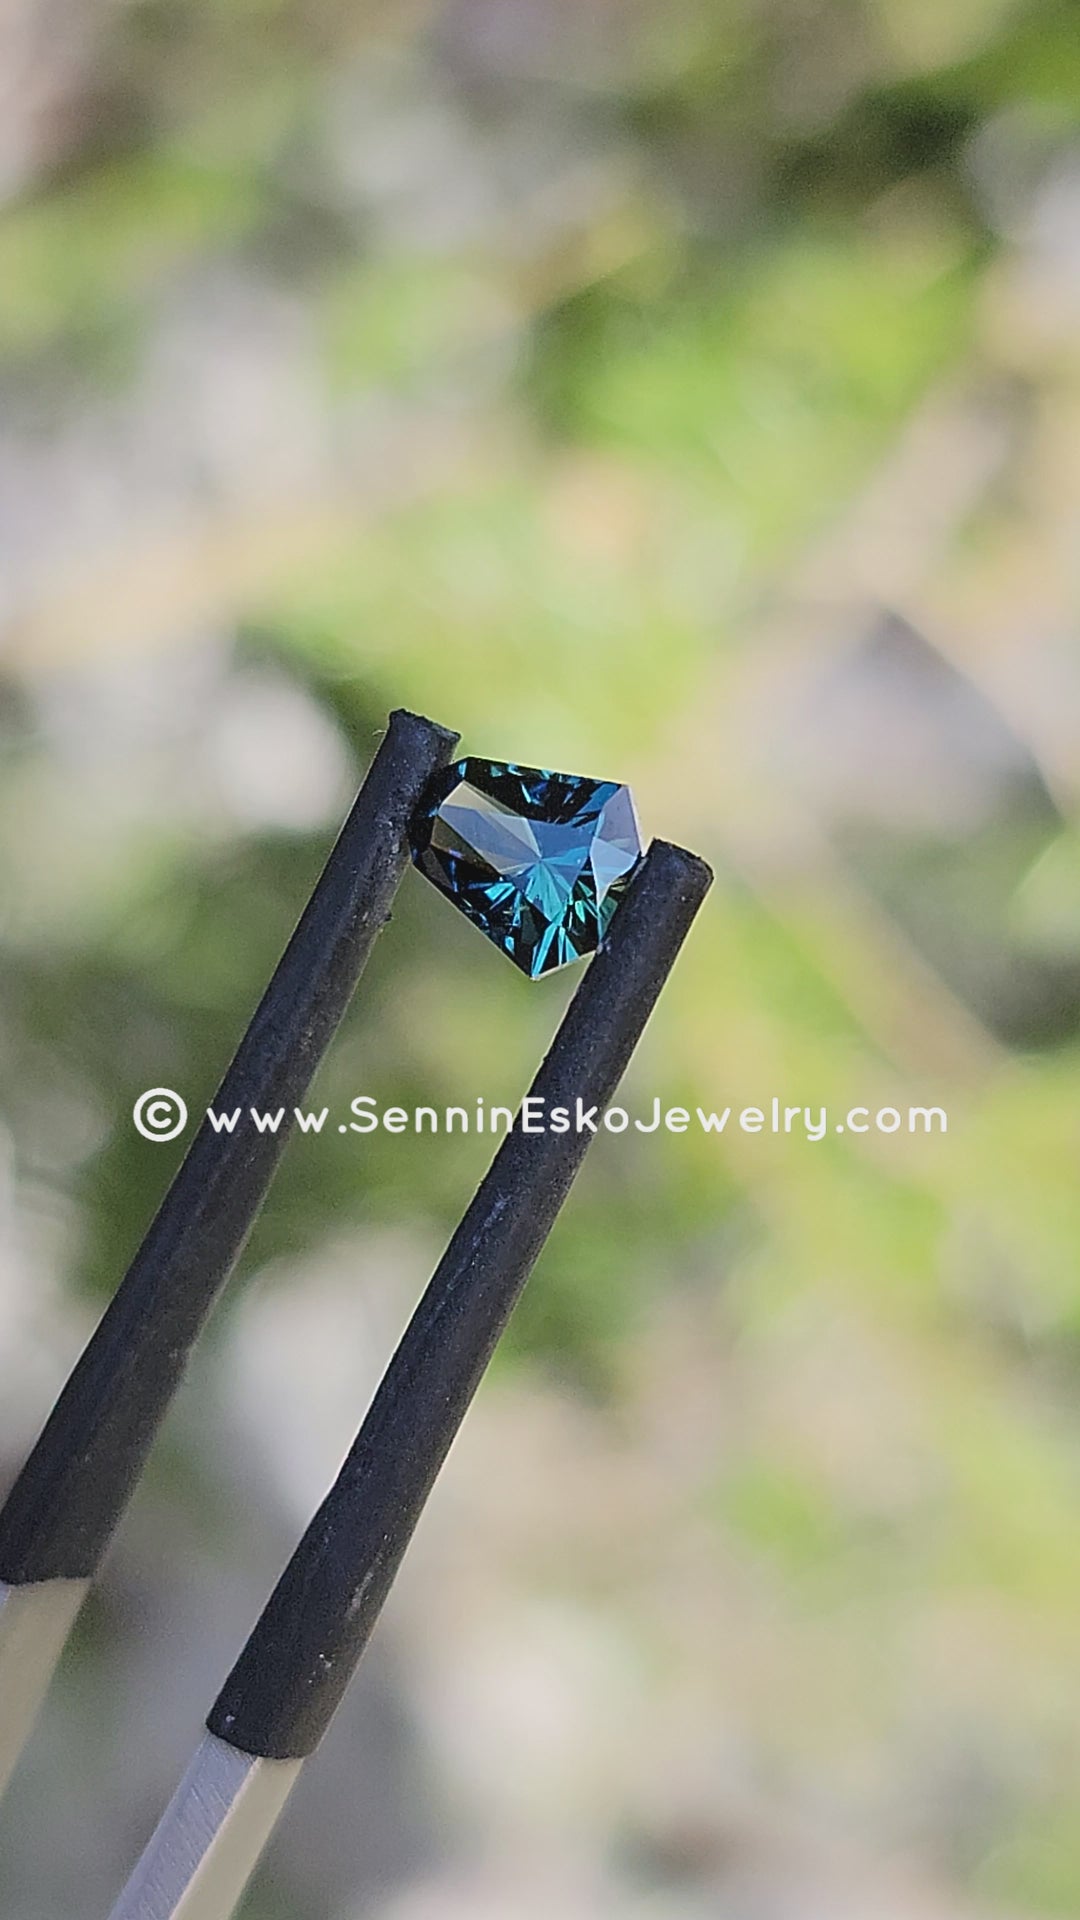 1,1 Karat tintengrüner/blauer kenianischer Saphir-Oktagon – 6,5 x 5,3 mm, Fantasieform